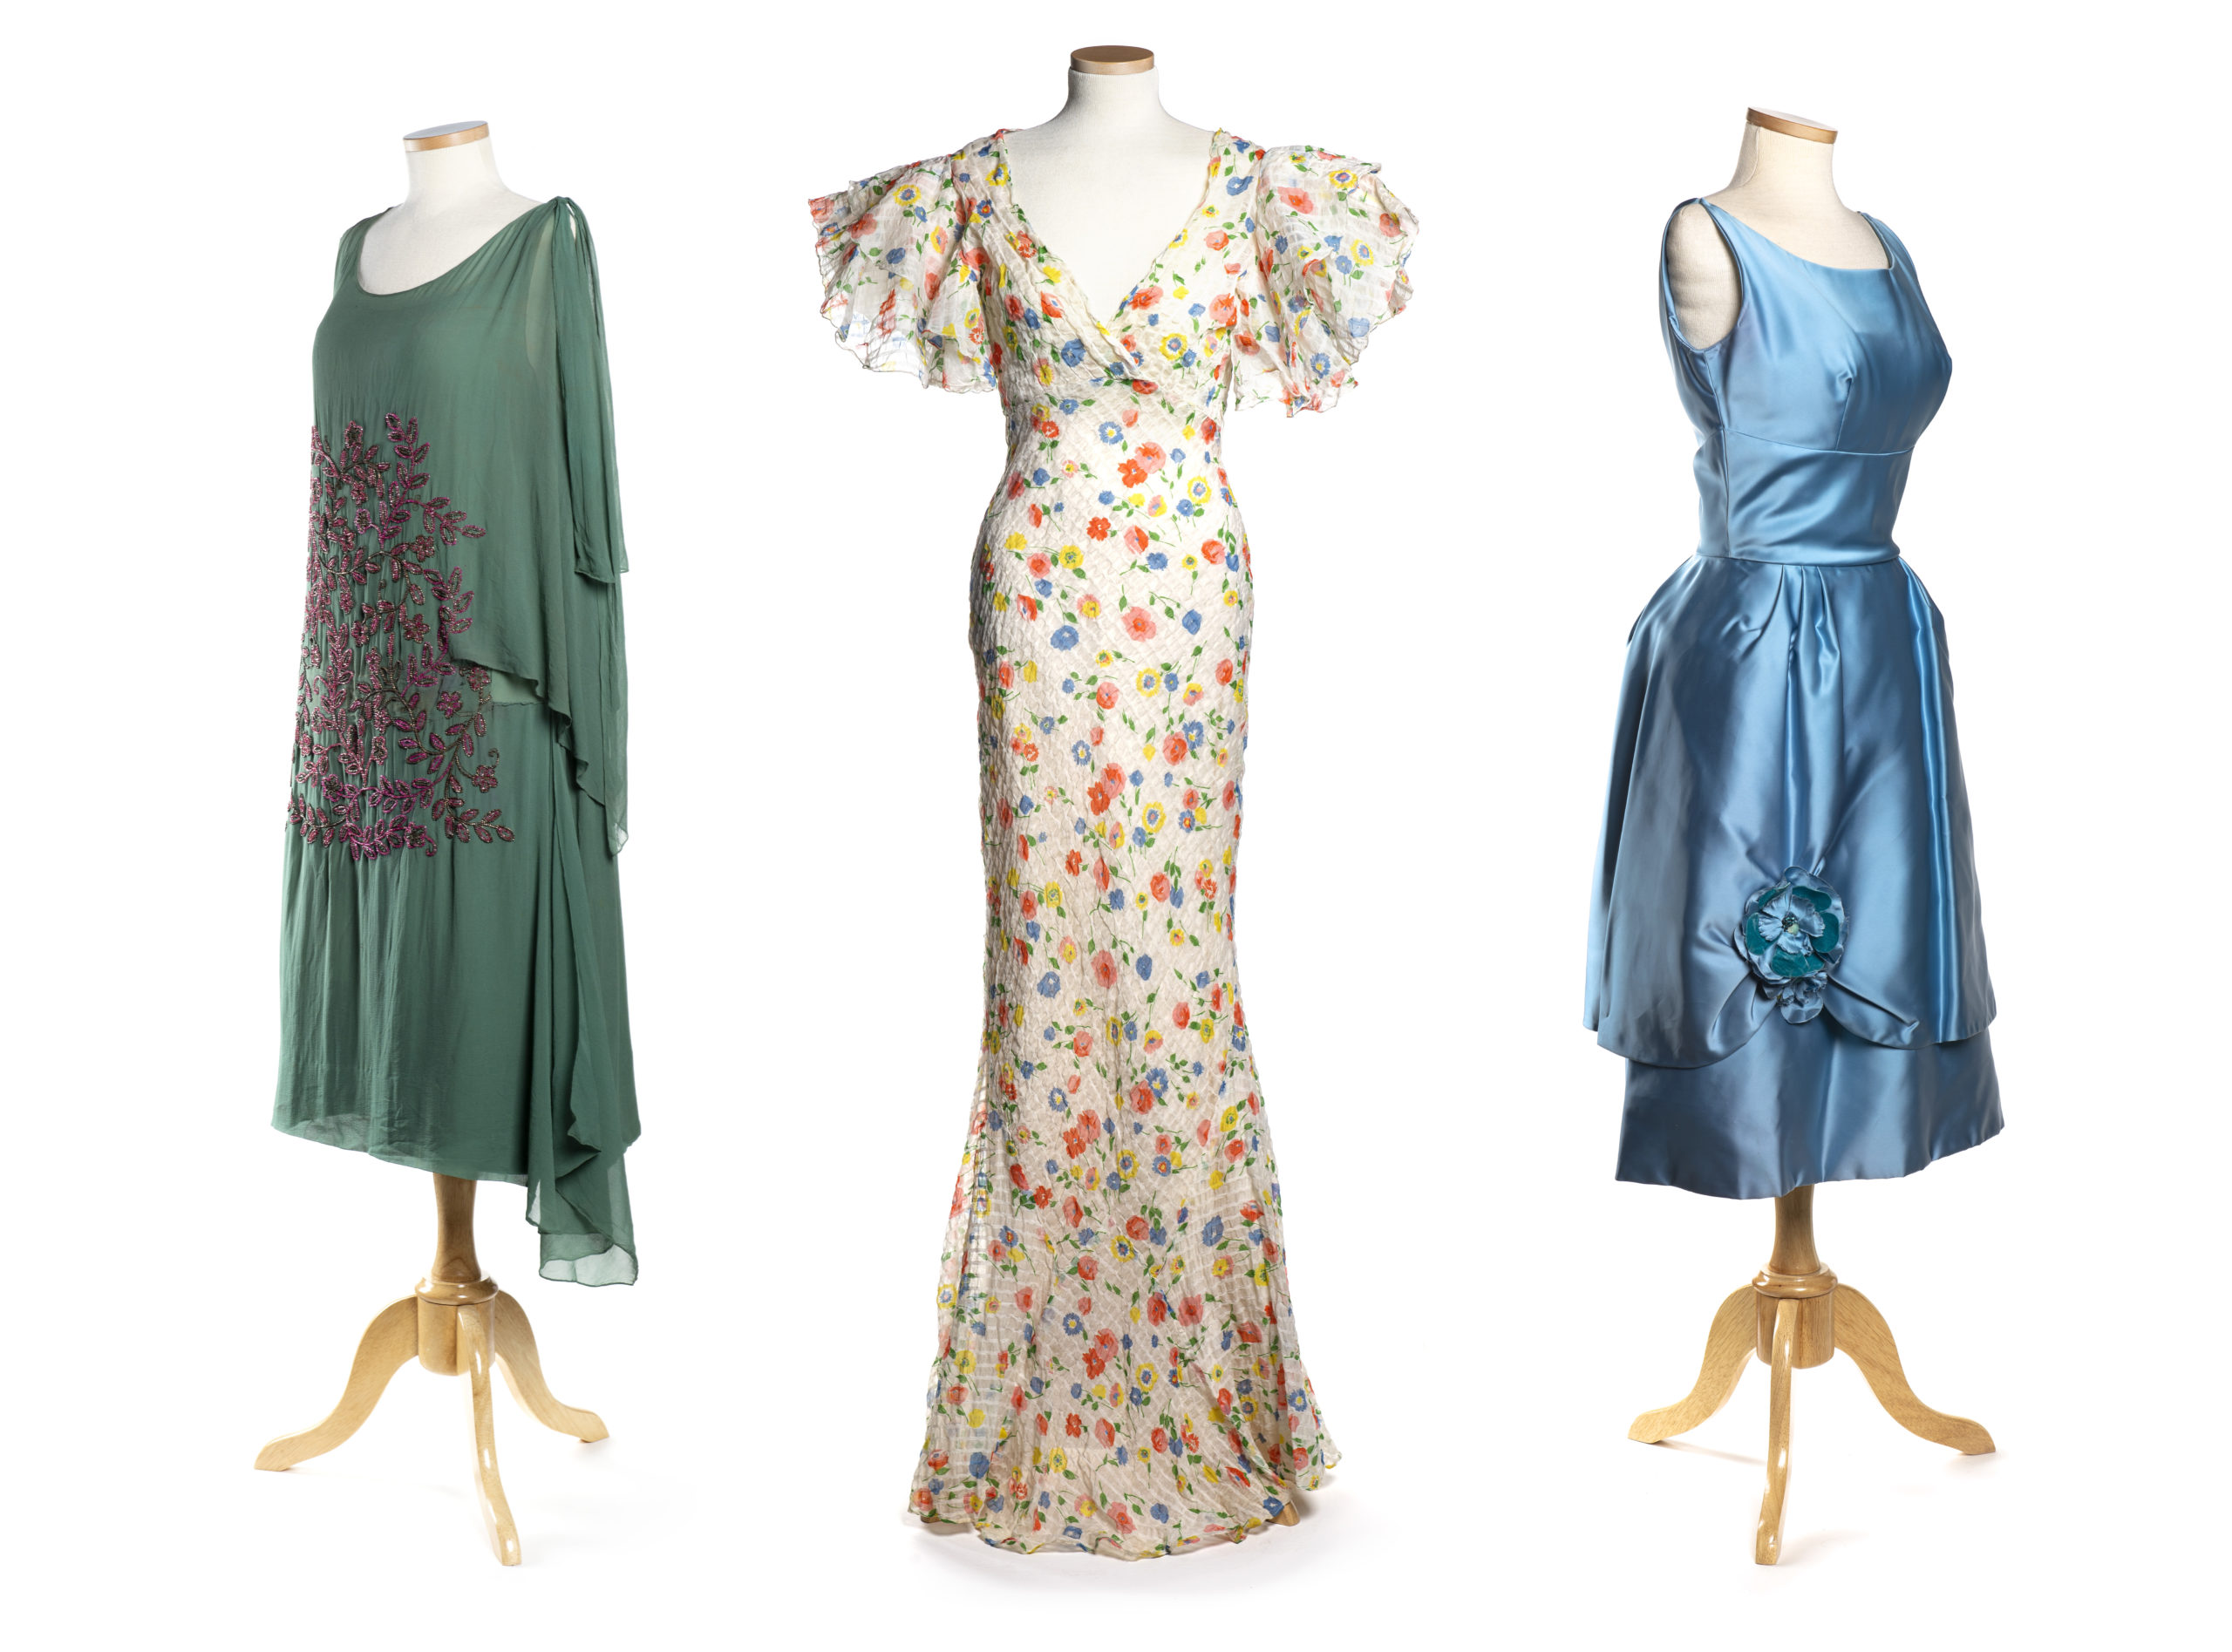 Exclusive Storeroom Tour: Haute for Summer with Curator of Historic Textiles Virginia Theerman